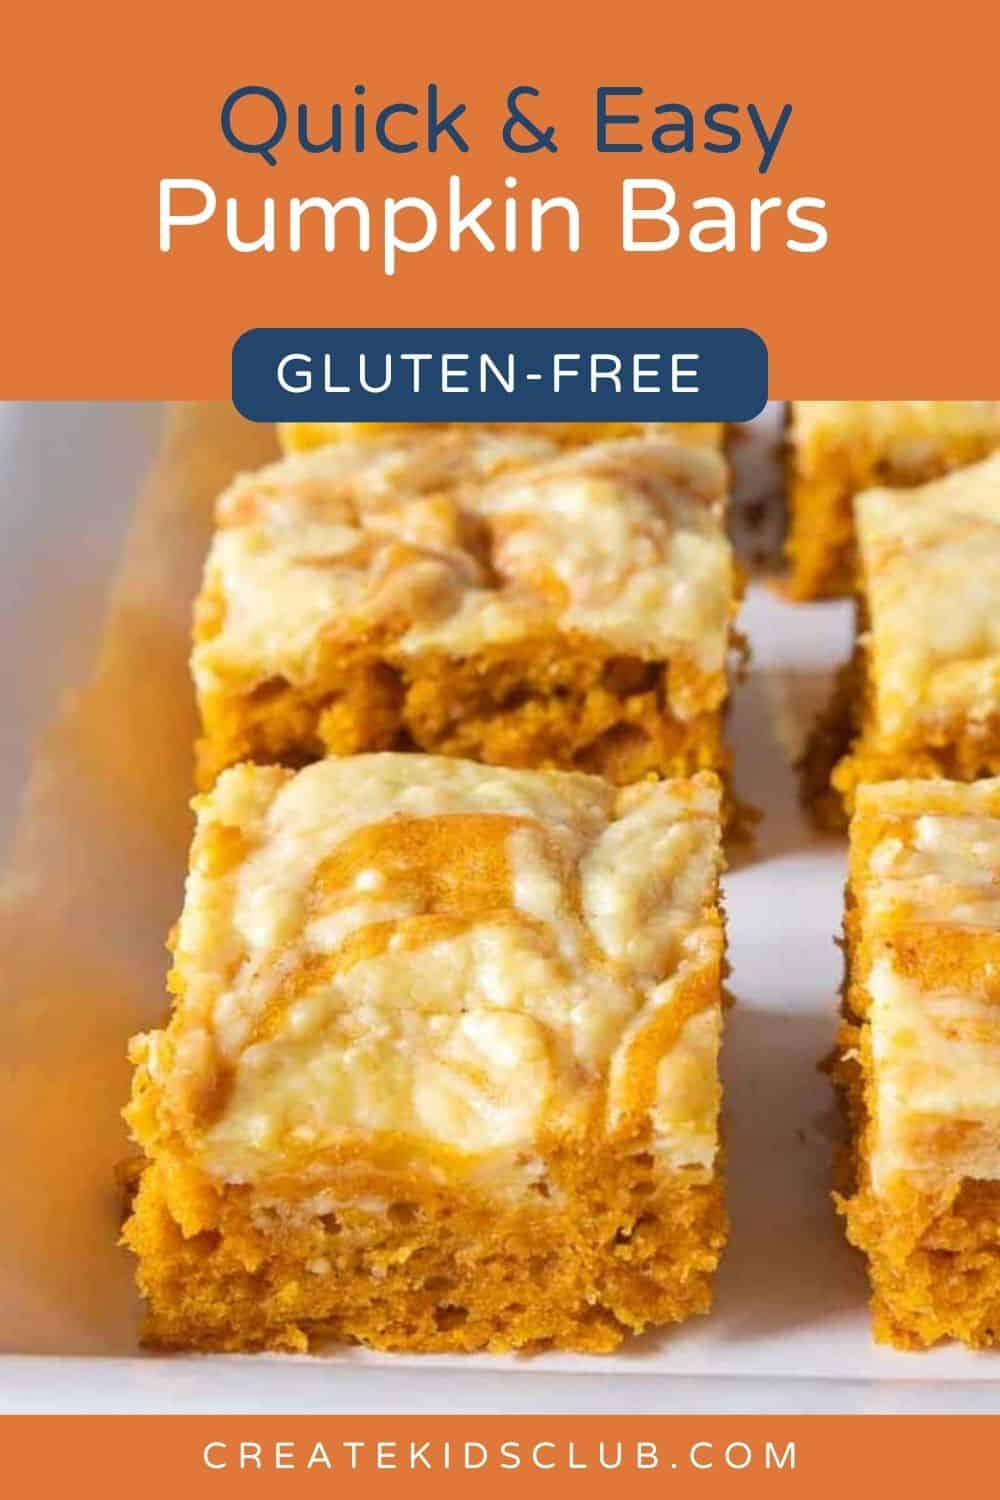 pin of gluten free pumpkin bars